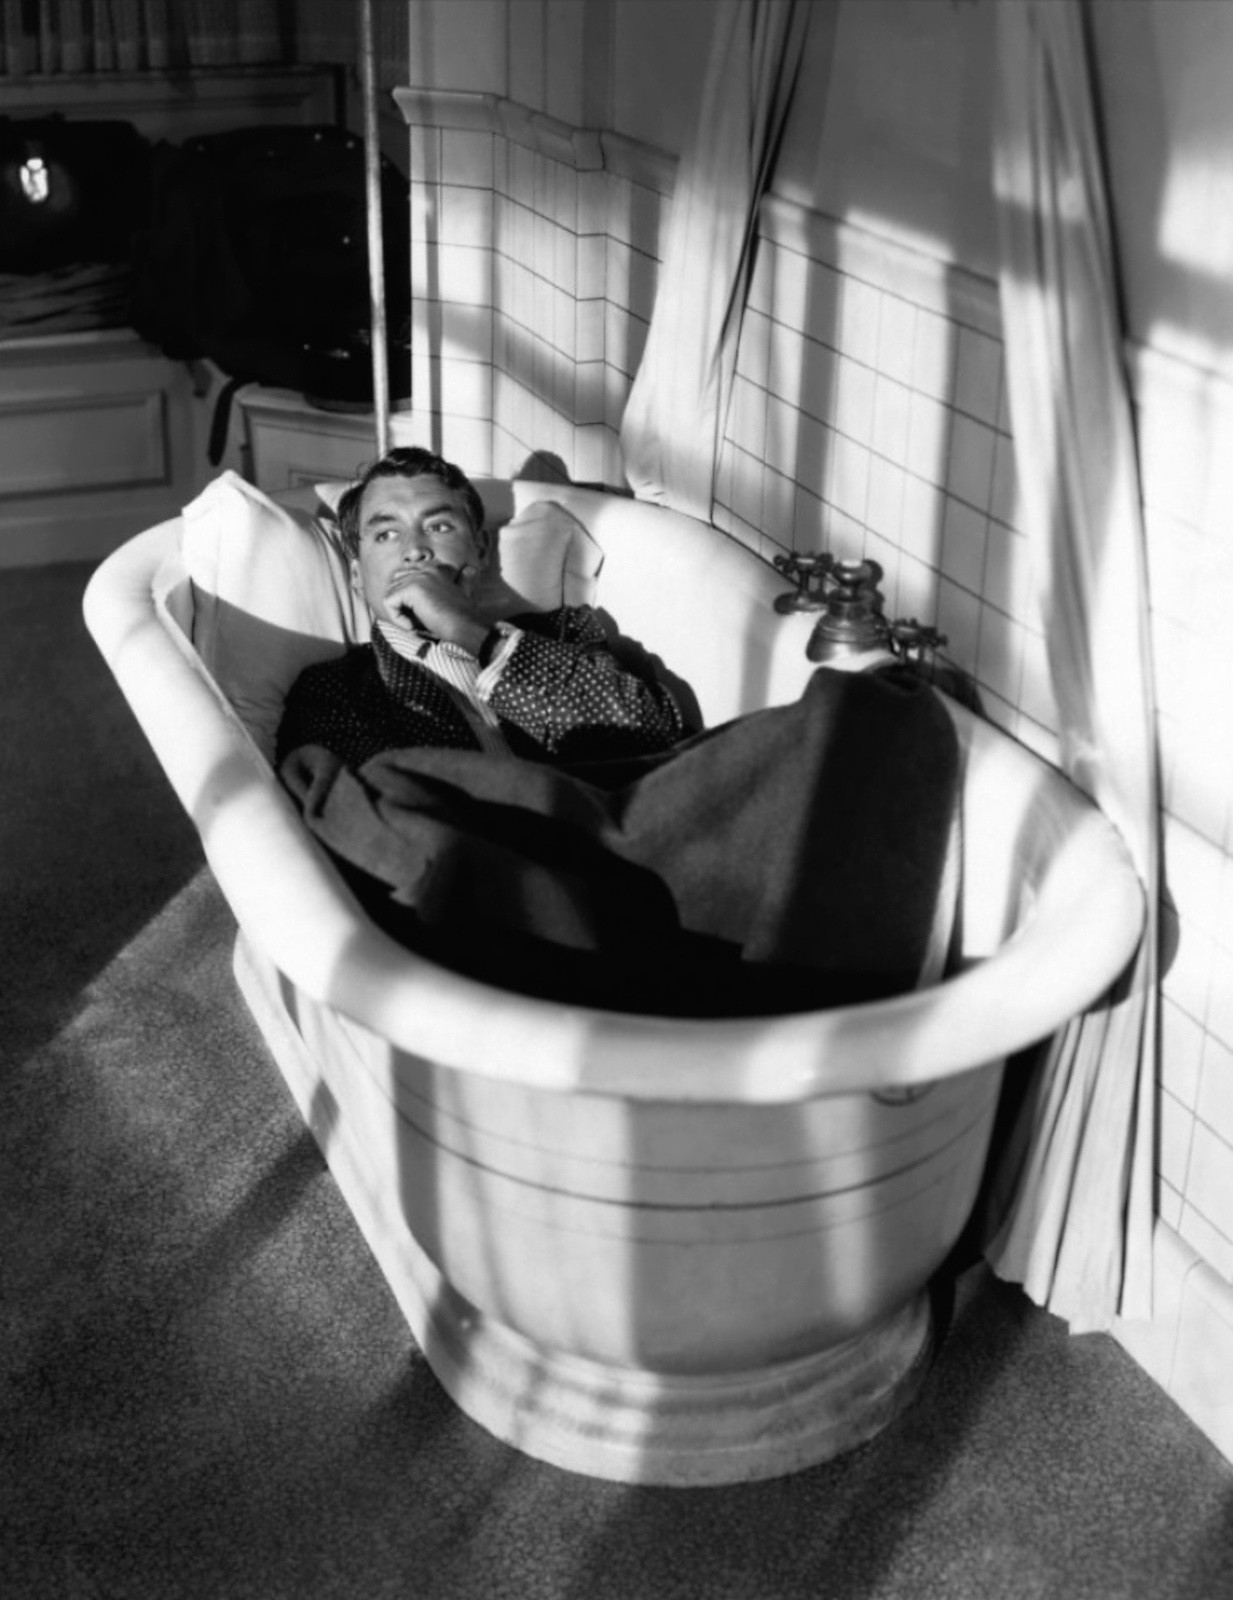 Кэри Грант (Cary Grant)